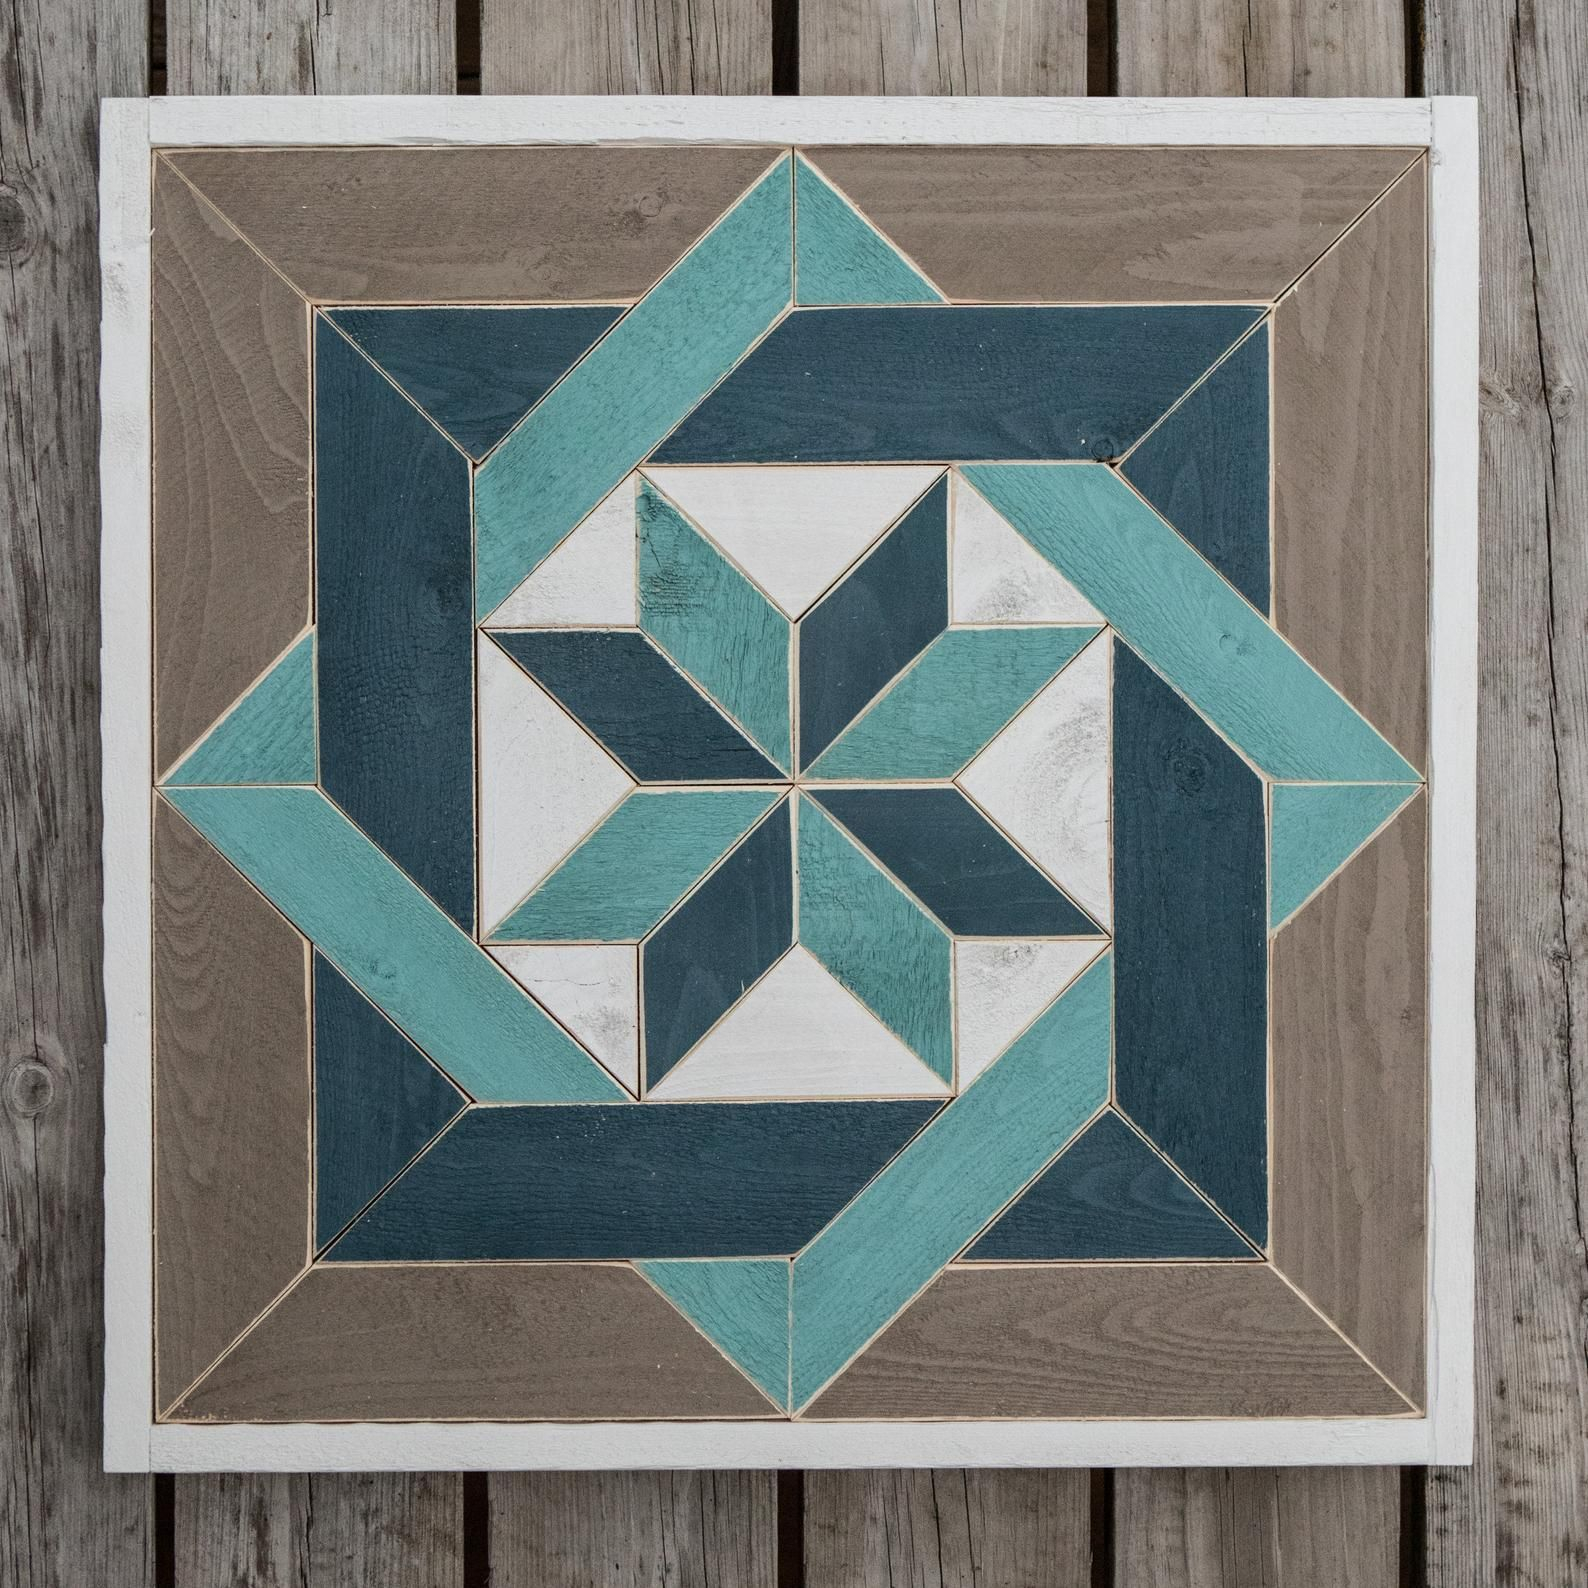 Wood Quilt Square Reclaimed Wall Art Handmade Quilt Block Pattern